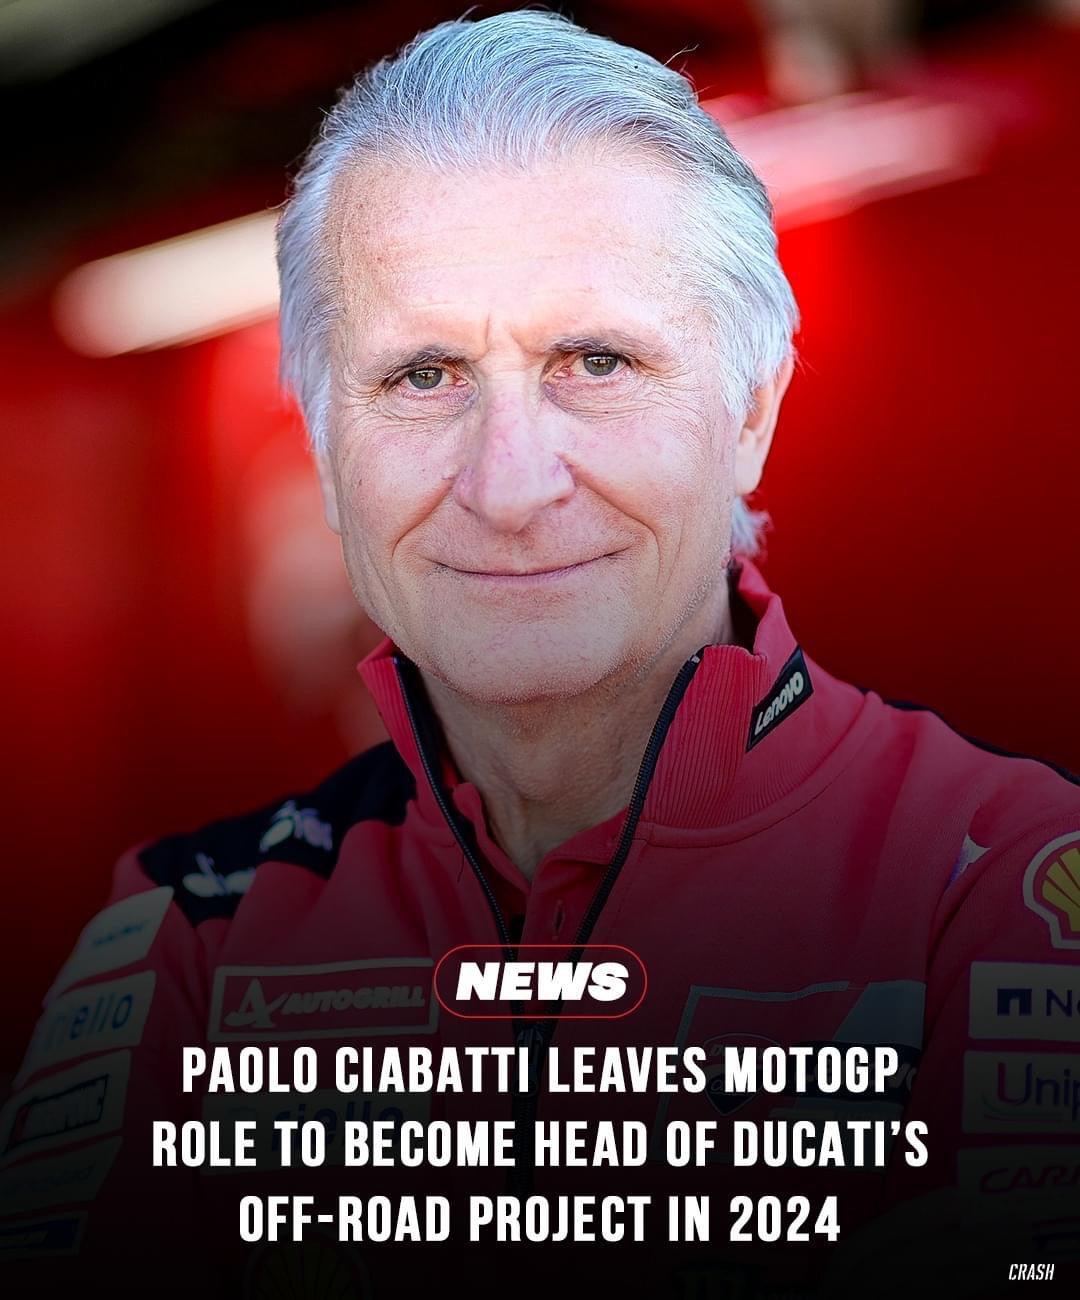 Big News! Paolo Ciabatti Is leaving Ducati MotoGP team!!!